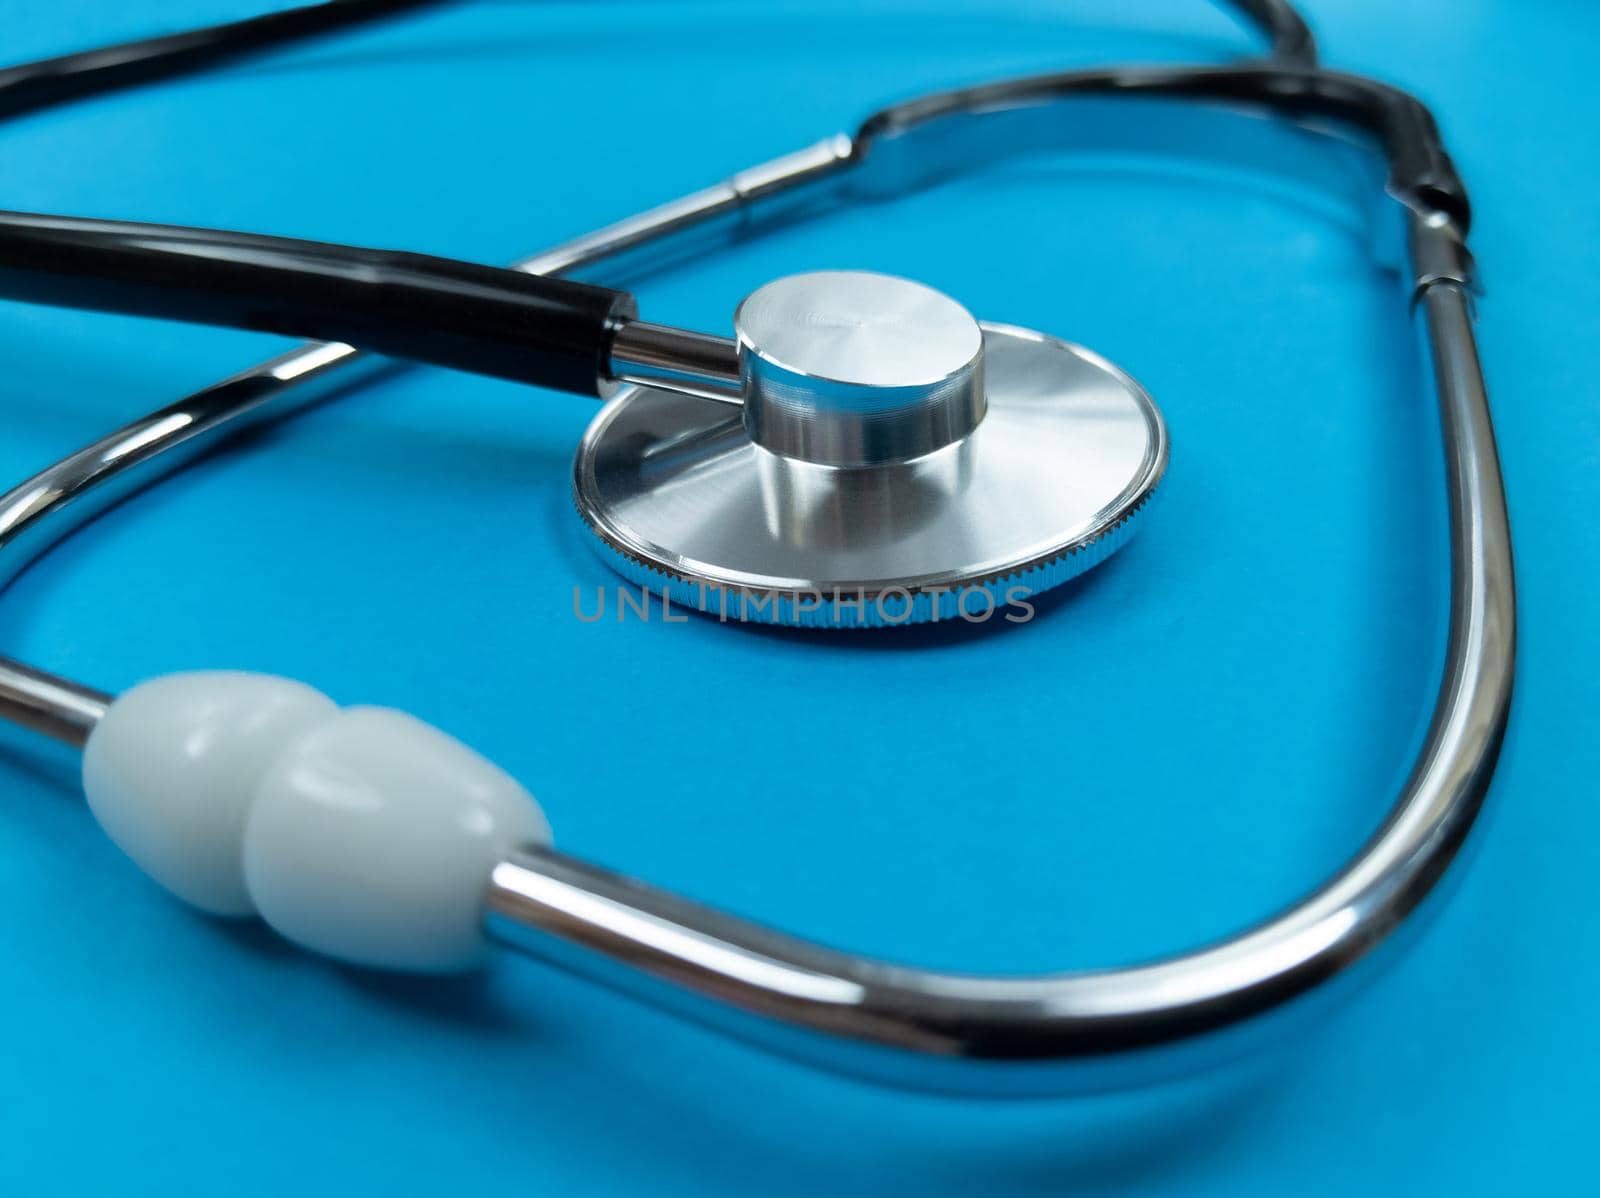 Black stethoscope on a blue background. Stock photo.